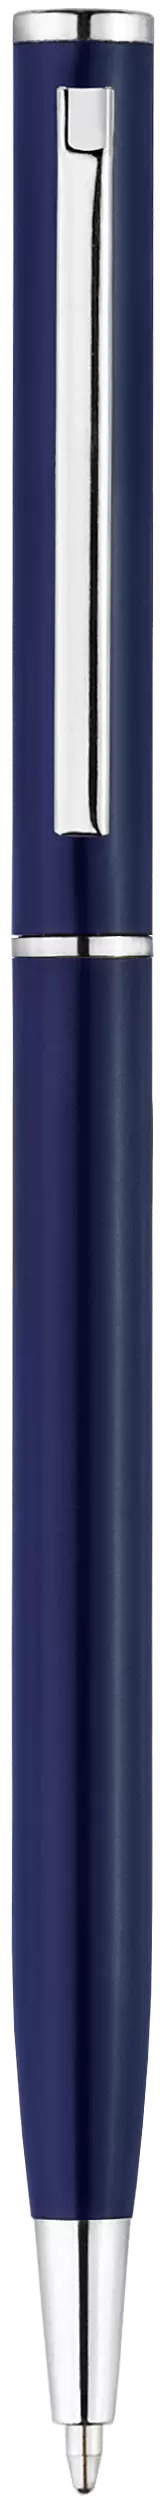 Ручка HILTON Темно-синяя 1060-14